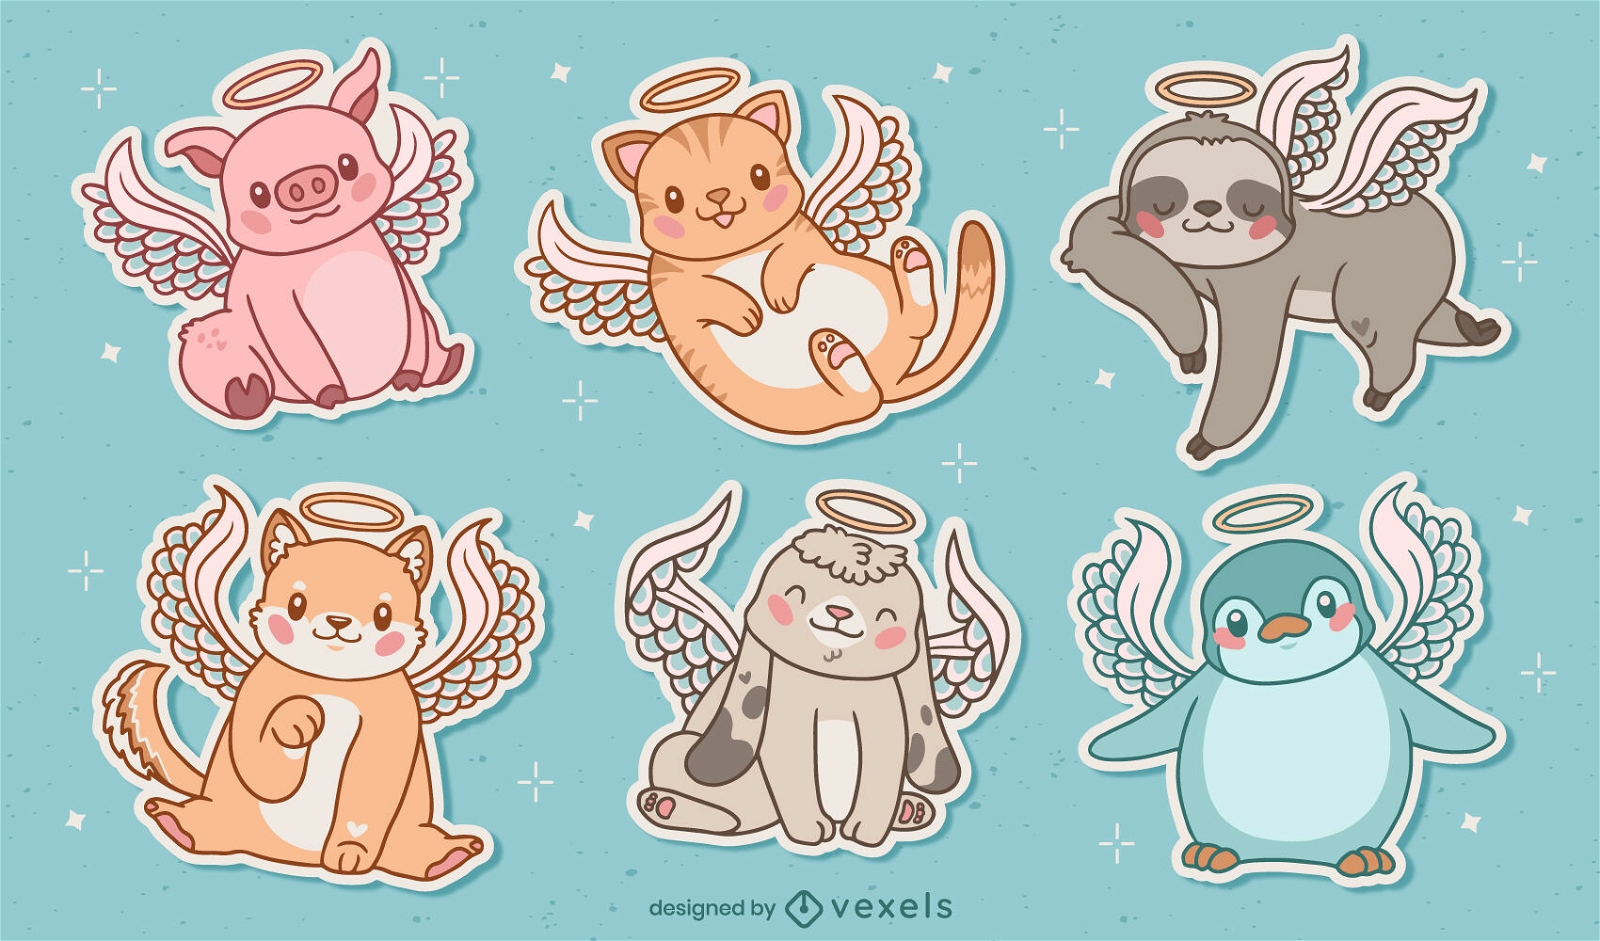 Cute angel animals characters set